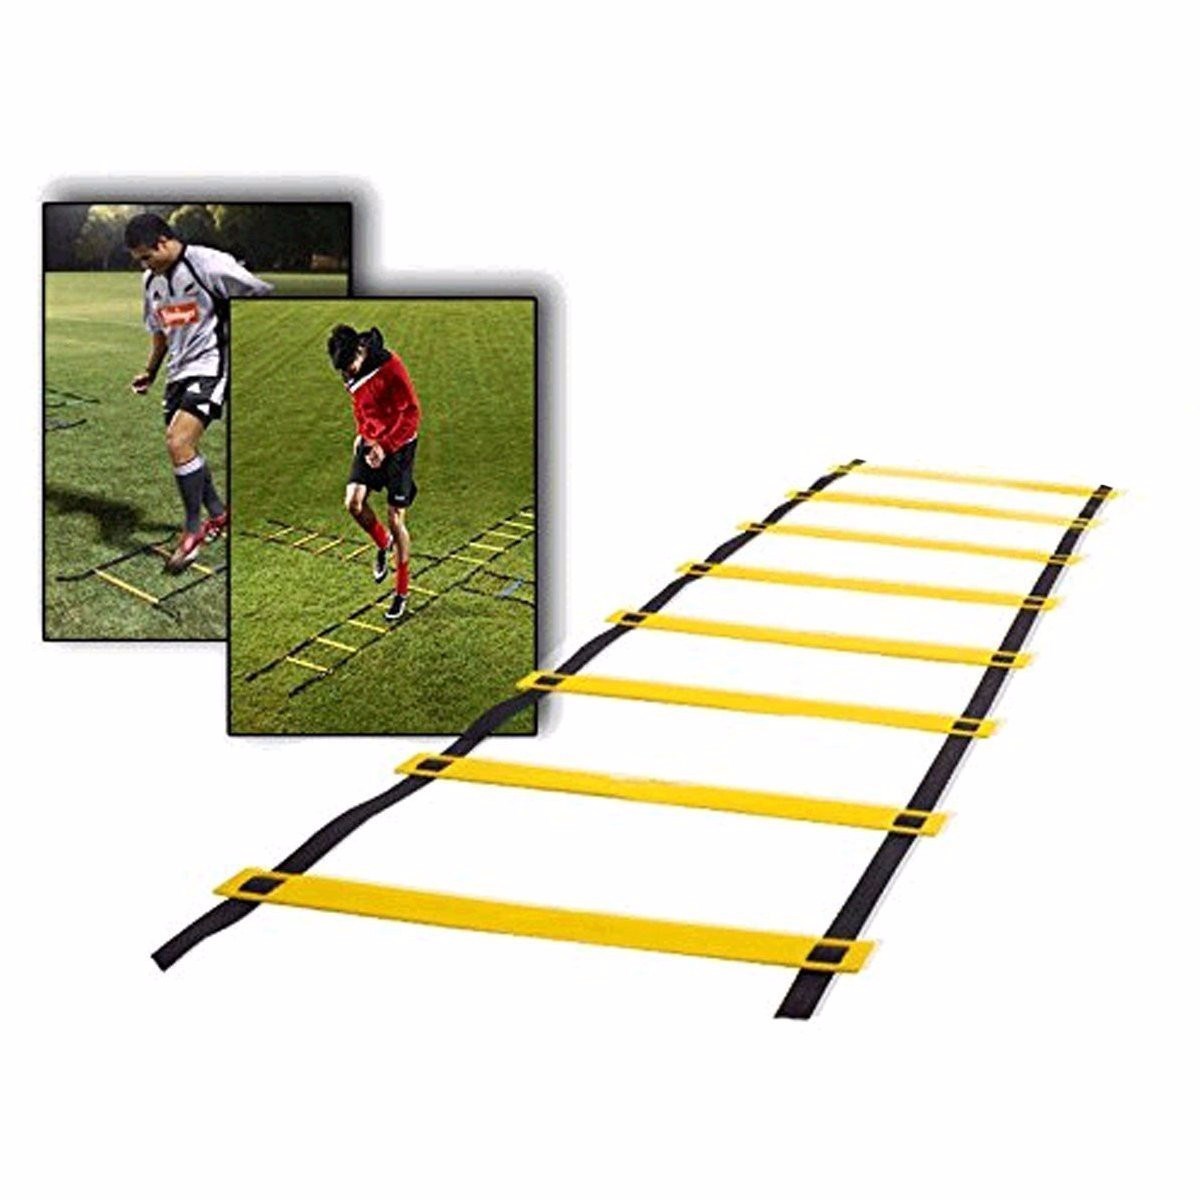 CAMTOA-4m-8-Rung-Training-Ladder-Soccer-Basketball-Speed-Training-Ladder-Outdoor-Indoor-Sports-Train-1886067-1